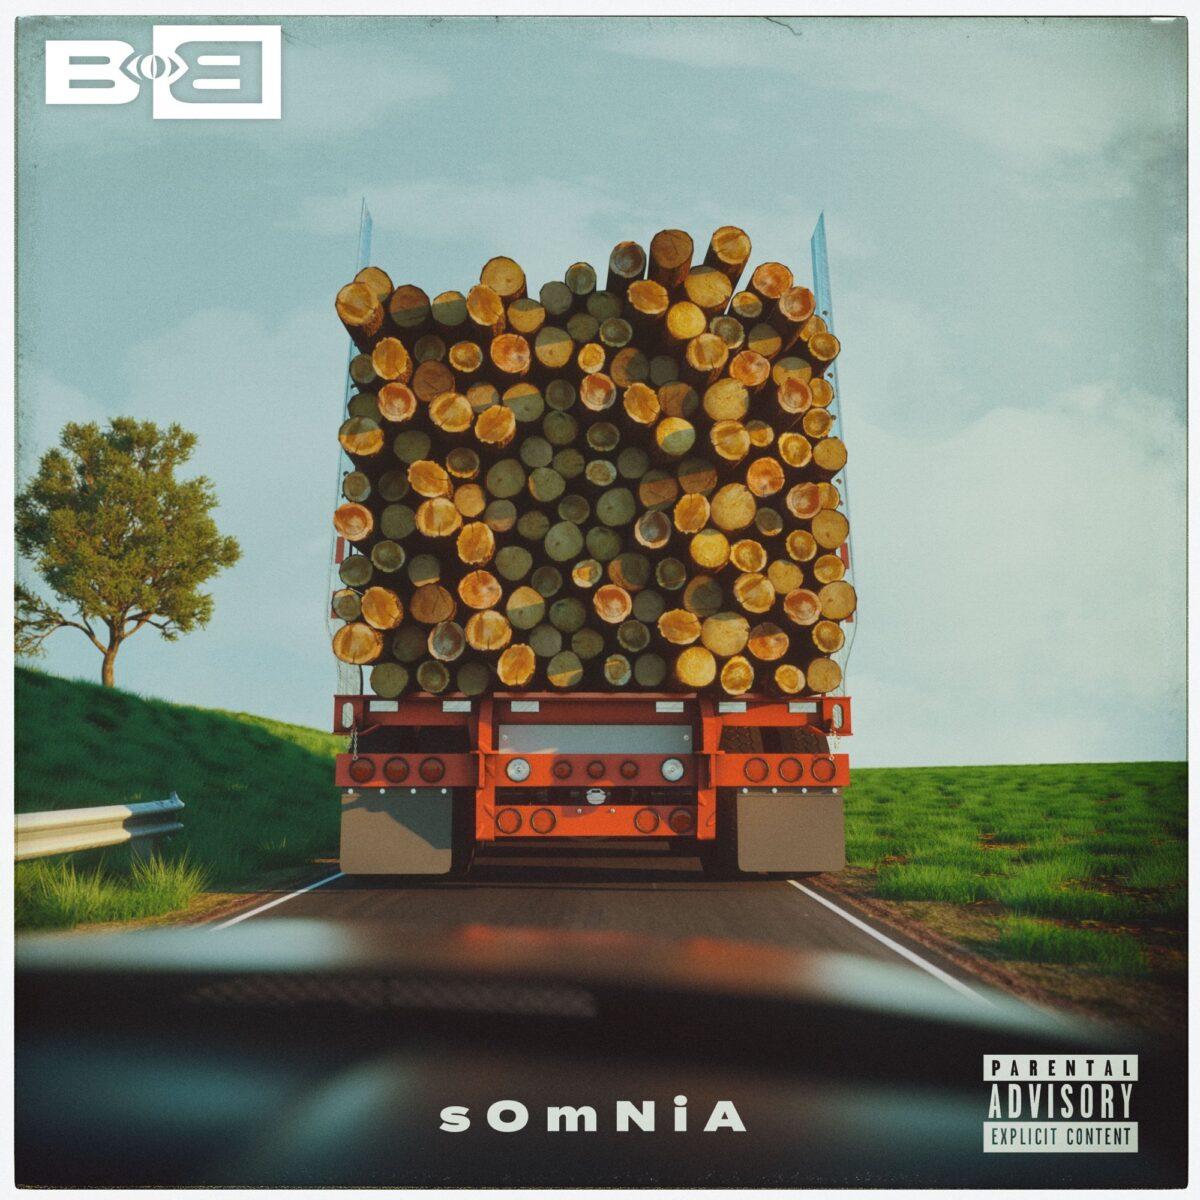 B.o.B Releases New Album 'Somnia'